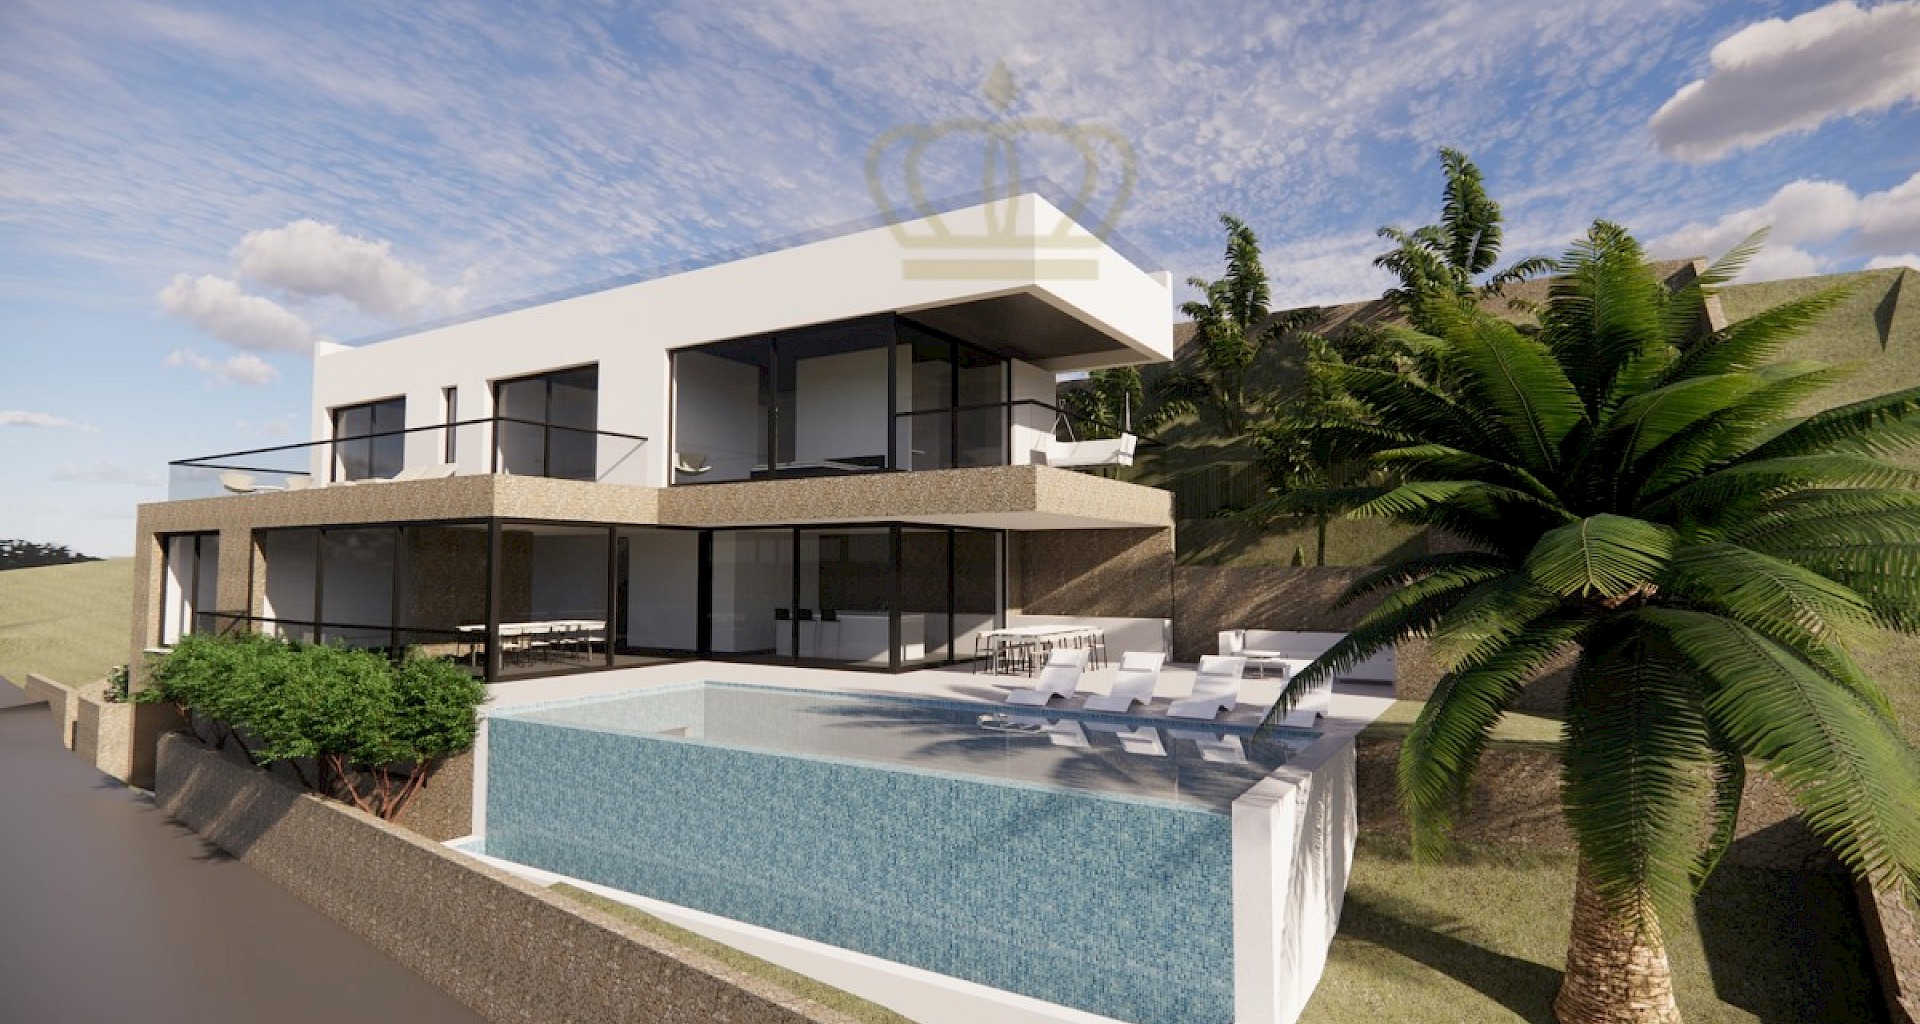 KROHN & LUEDEMANN Proyecto de villa en Palma con vista panorámica al mar en Génova Villa als Projekt in Palma